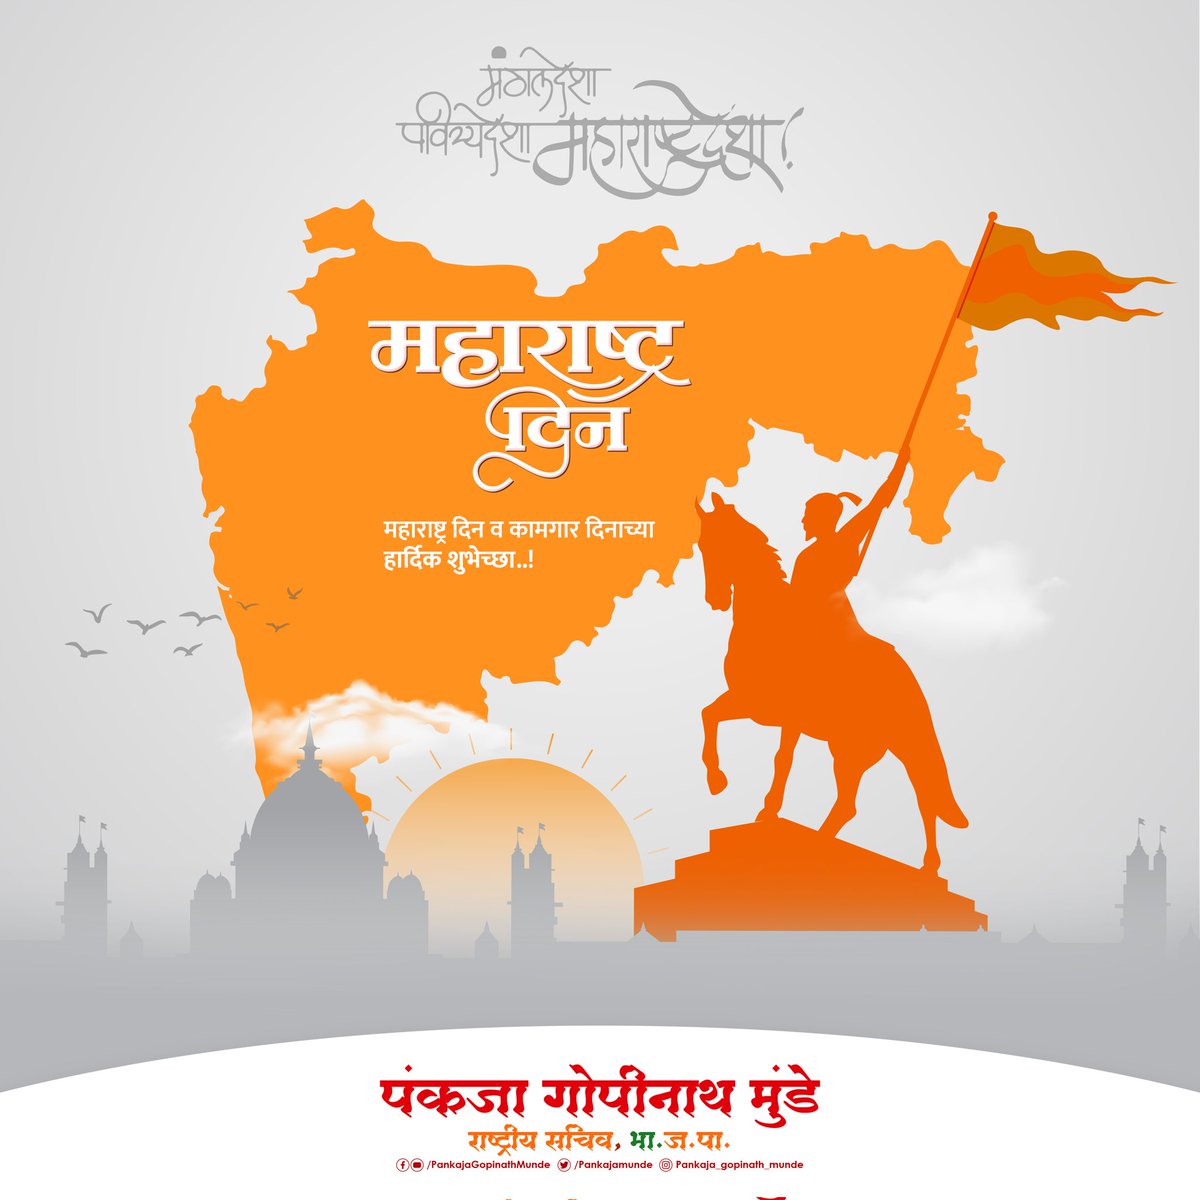 महाराष्ट्र दिन आणि कामगार दिनाच्या हार्दिक शुभेच्छा! 

#MaharashtraDin #LabourDay2023
#MaharashtraDay